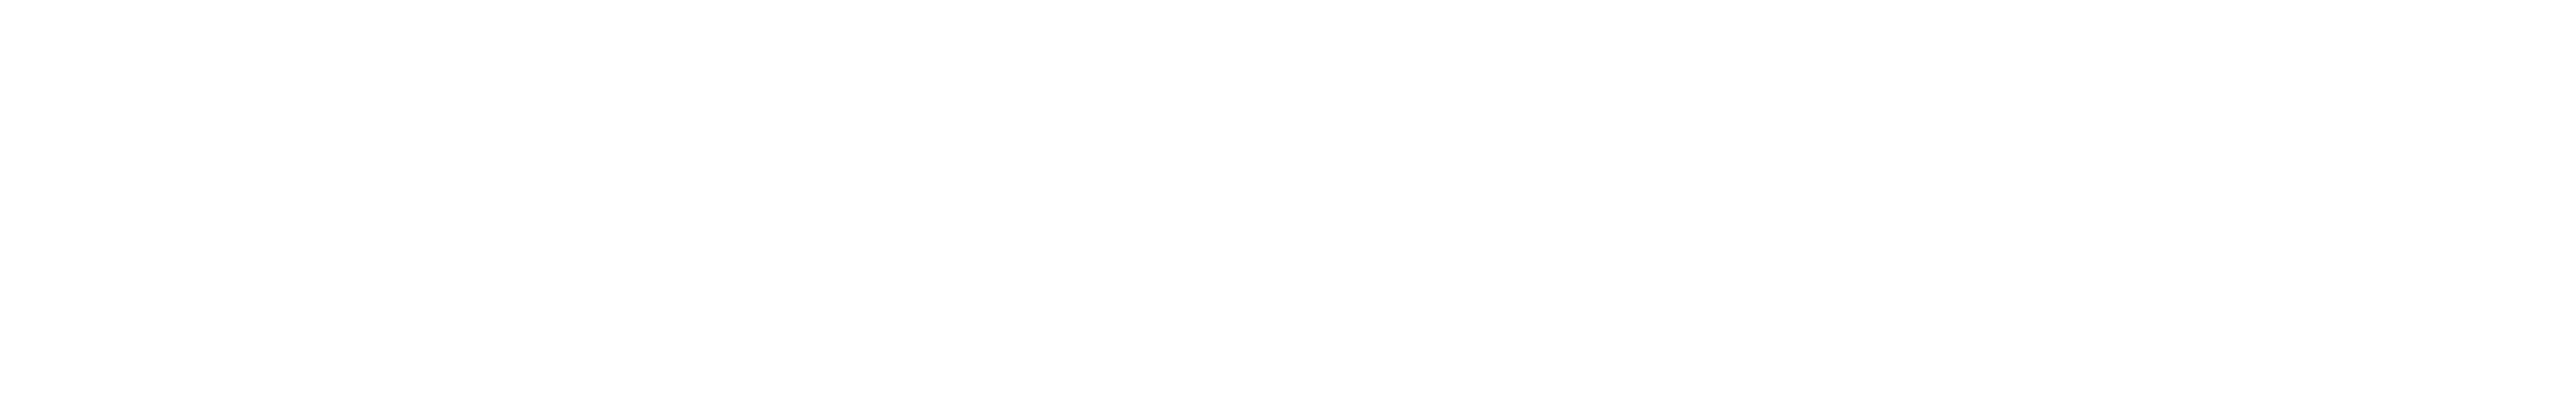 ordergroove logo